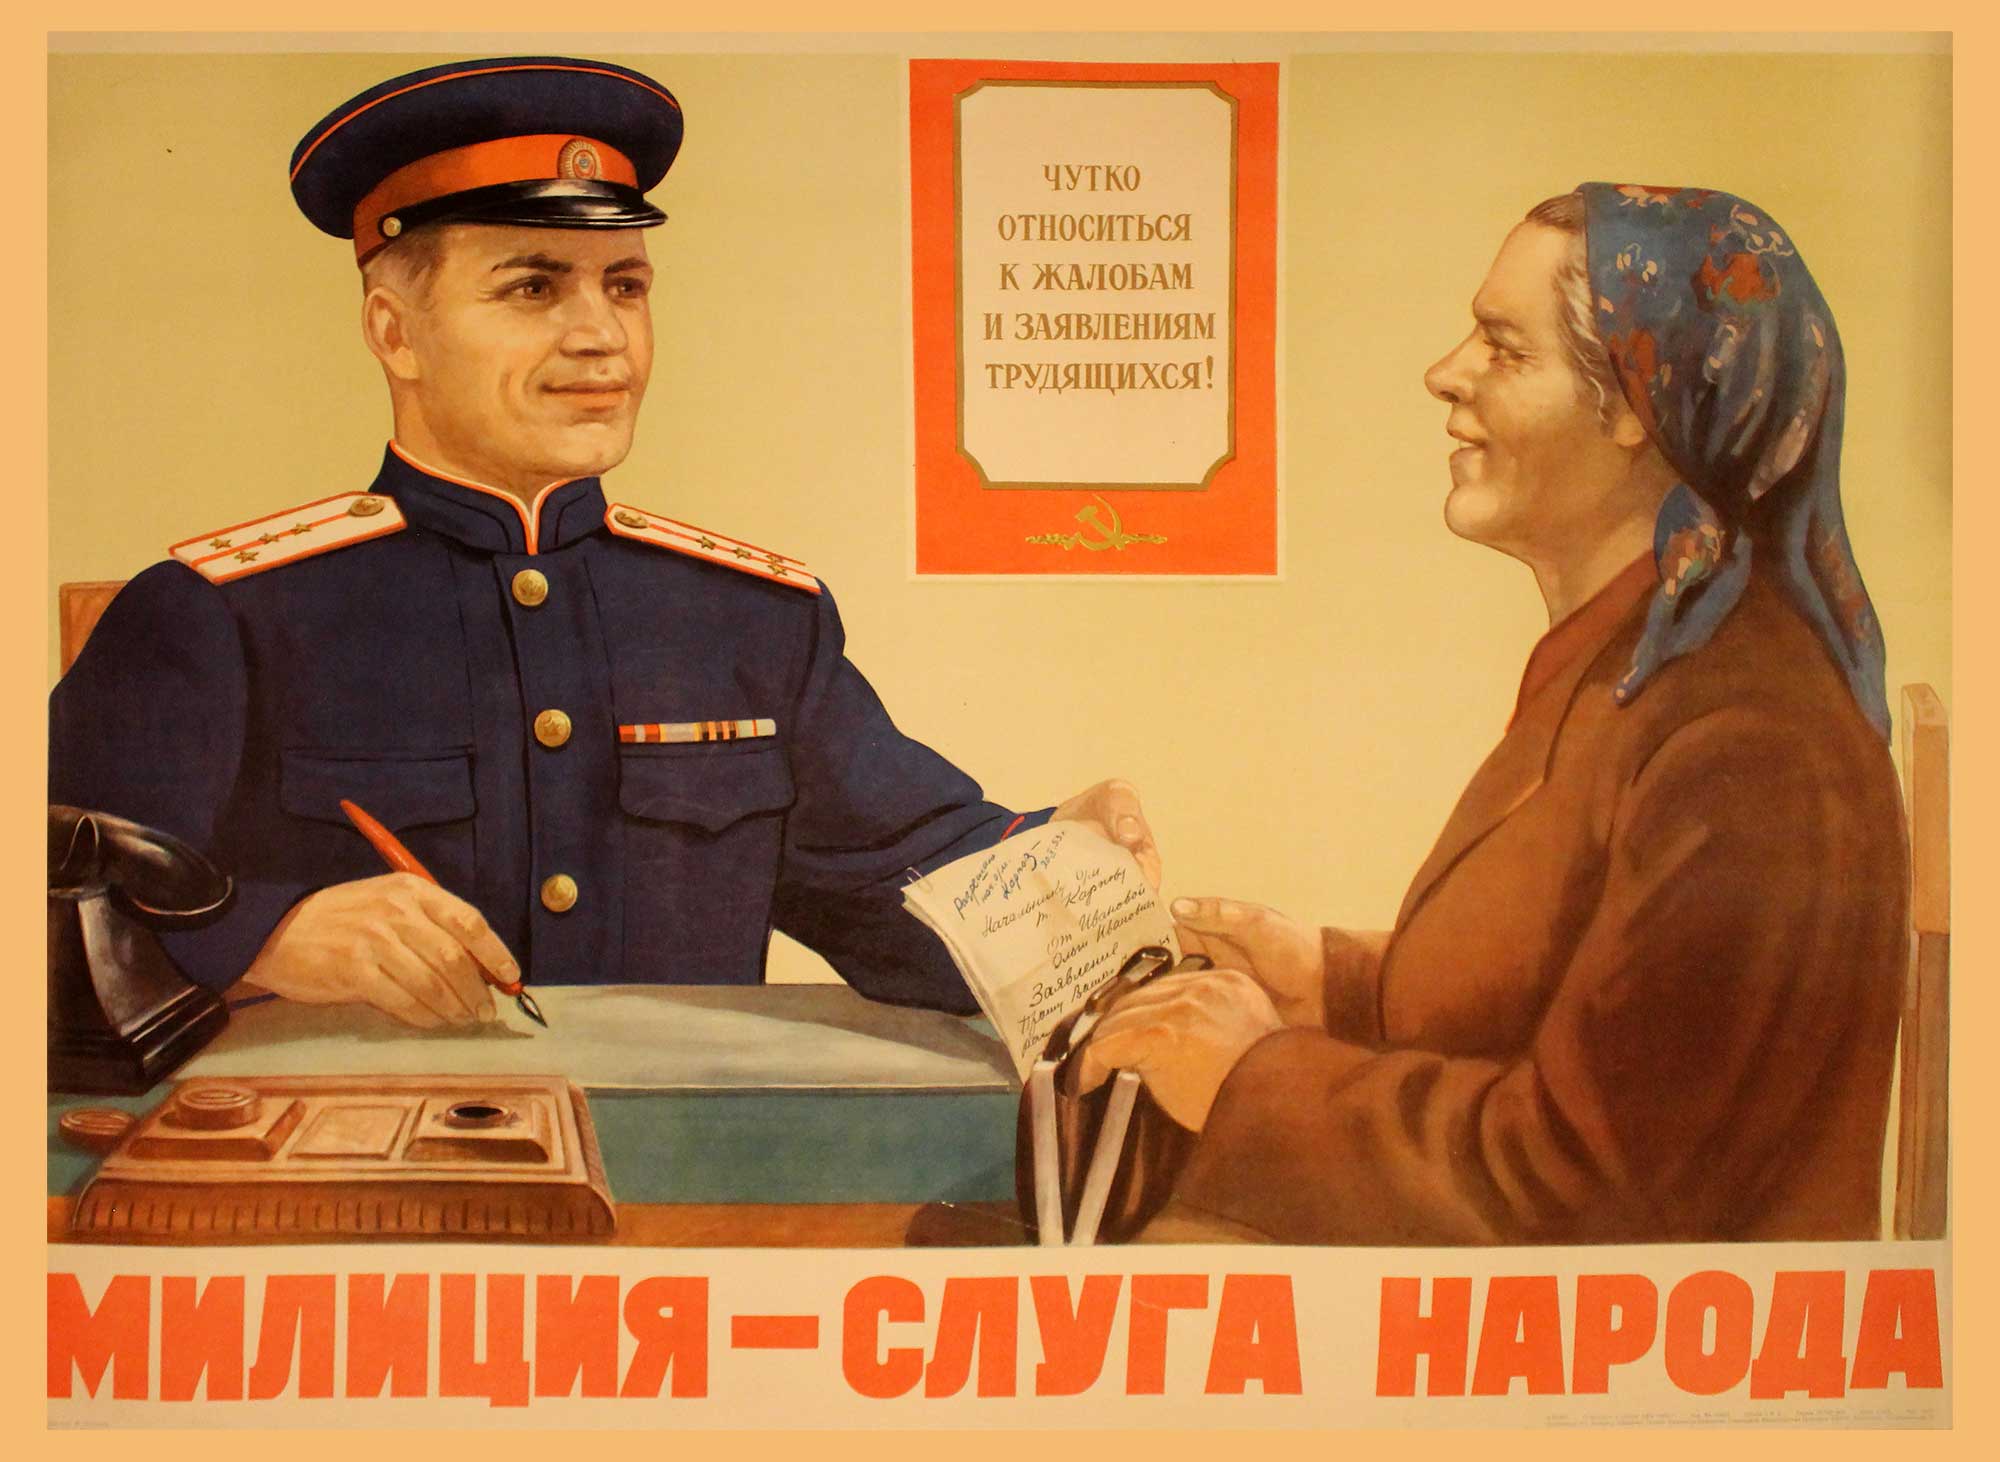 М. Соловьев. Плакат Милиция - слуга народа. 1962 год